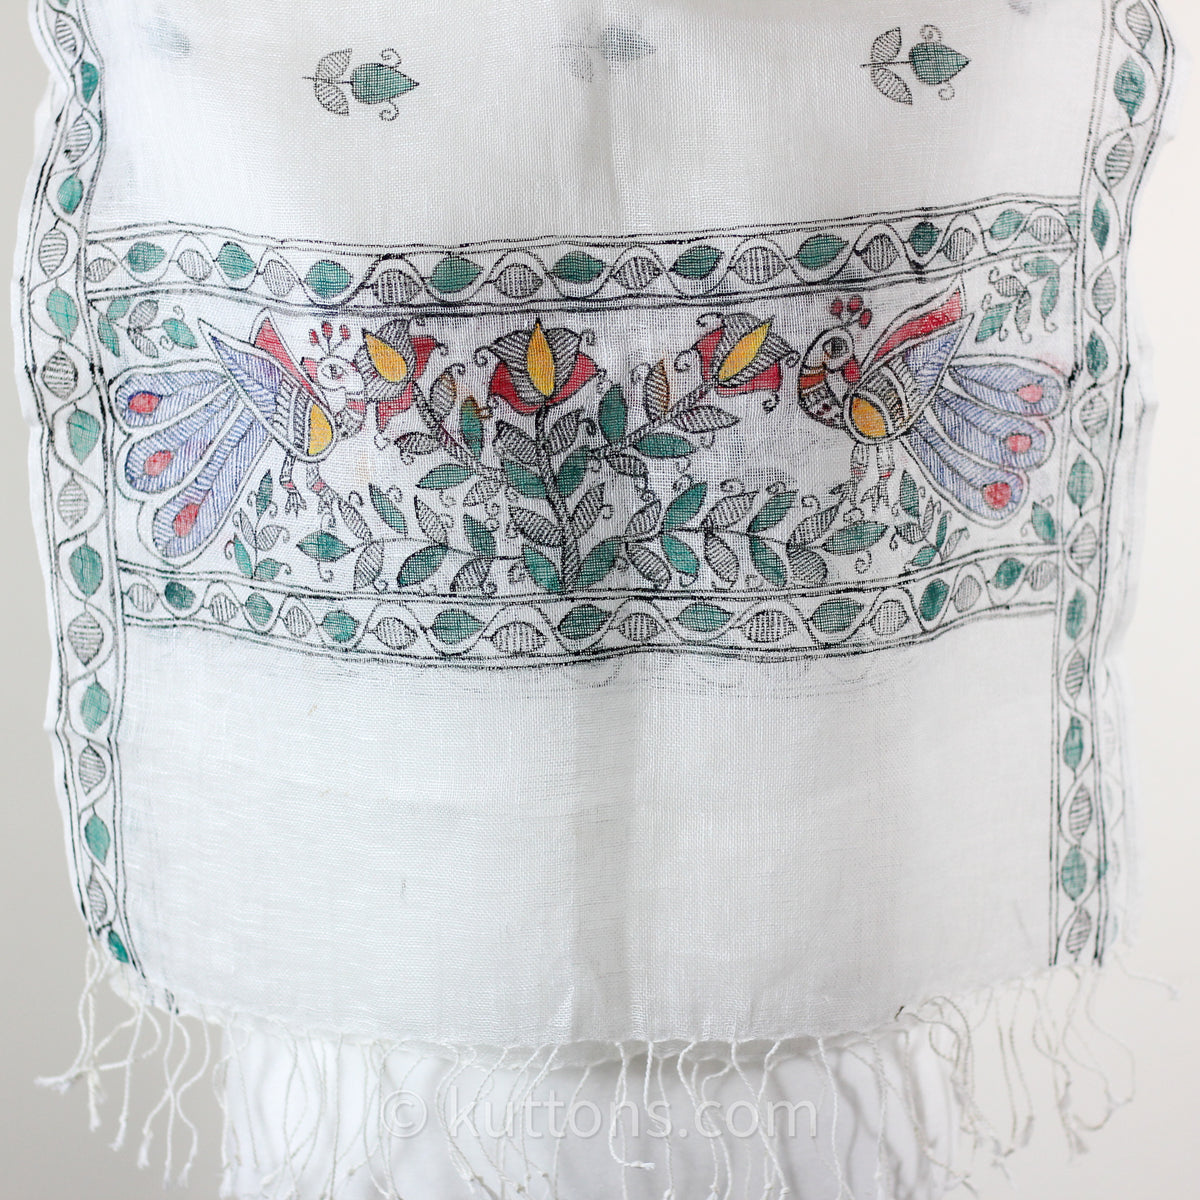 Hand-Painted Madhubani Linen Wrap with Tassels - Tribal Madhubani Motifs - Peacock, flowers